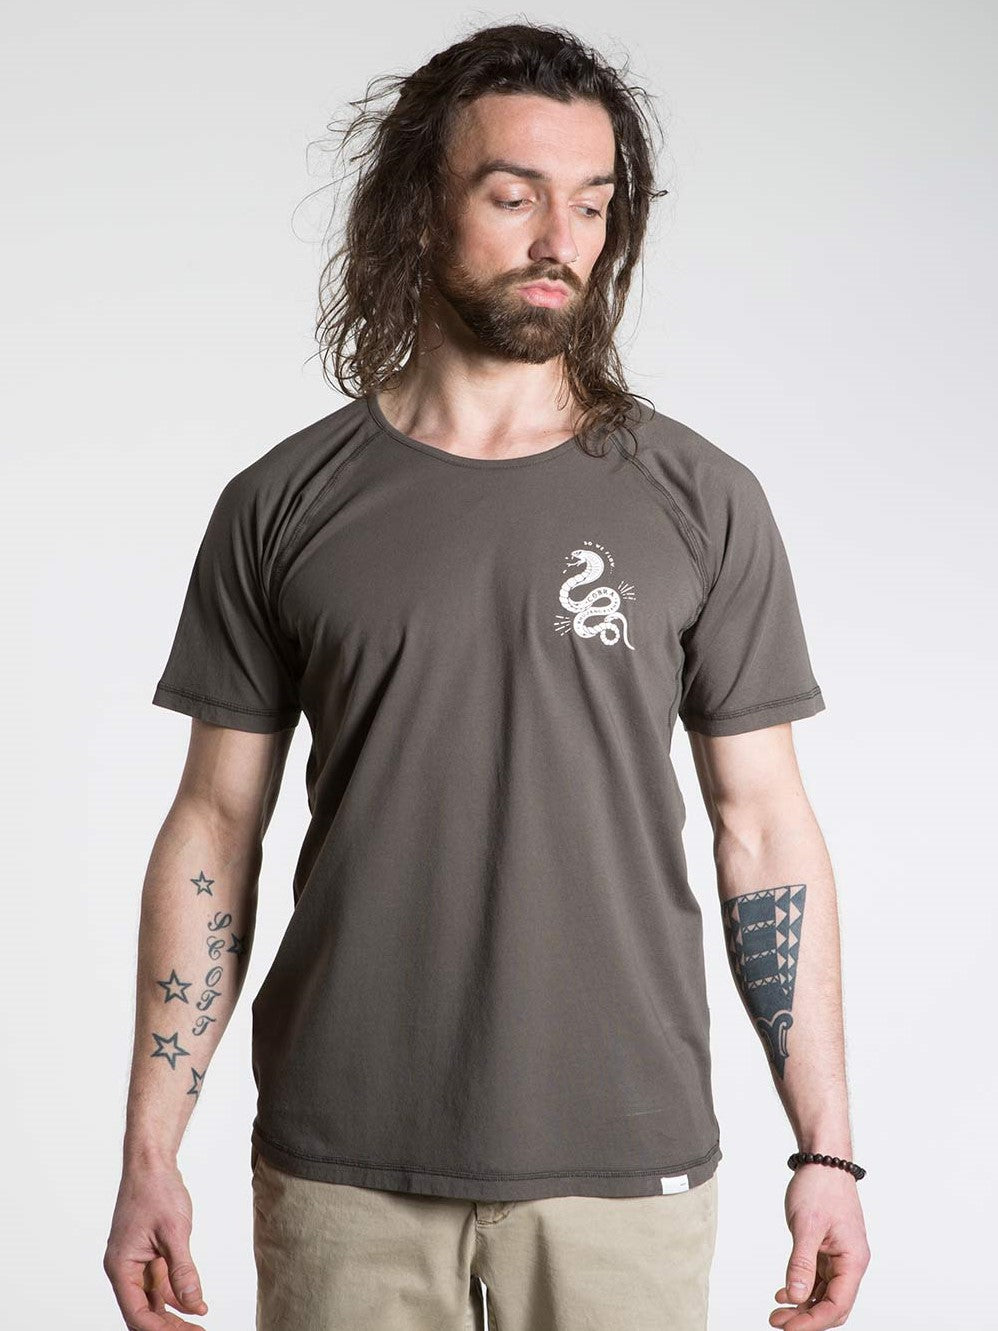 SO WE FLOW... soweflow... Short Sleeve Tee Men's Yoga Top Cobra T-Shirt Grit Brown - Activemen Clothing